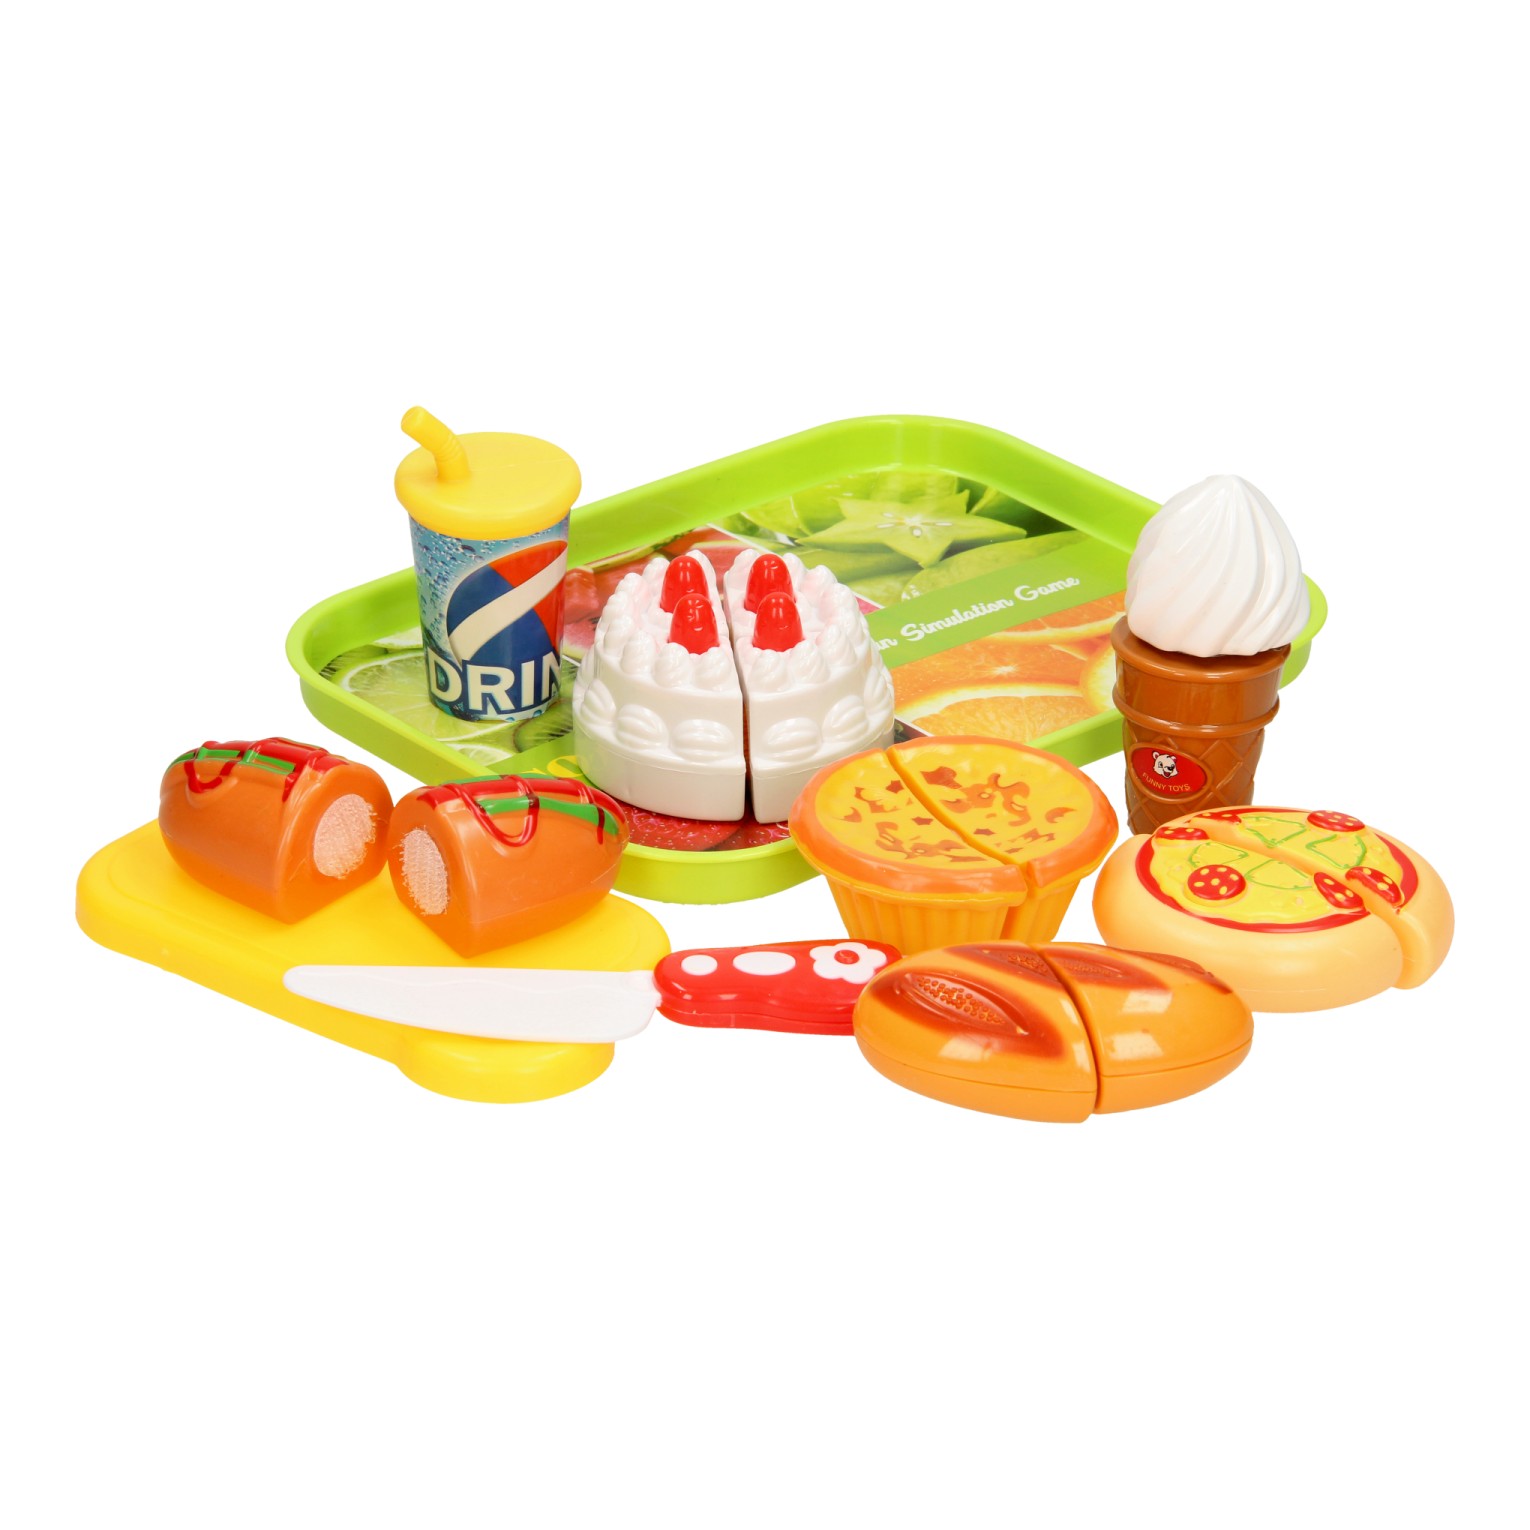 Cutting breakfast on Tray | Toys